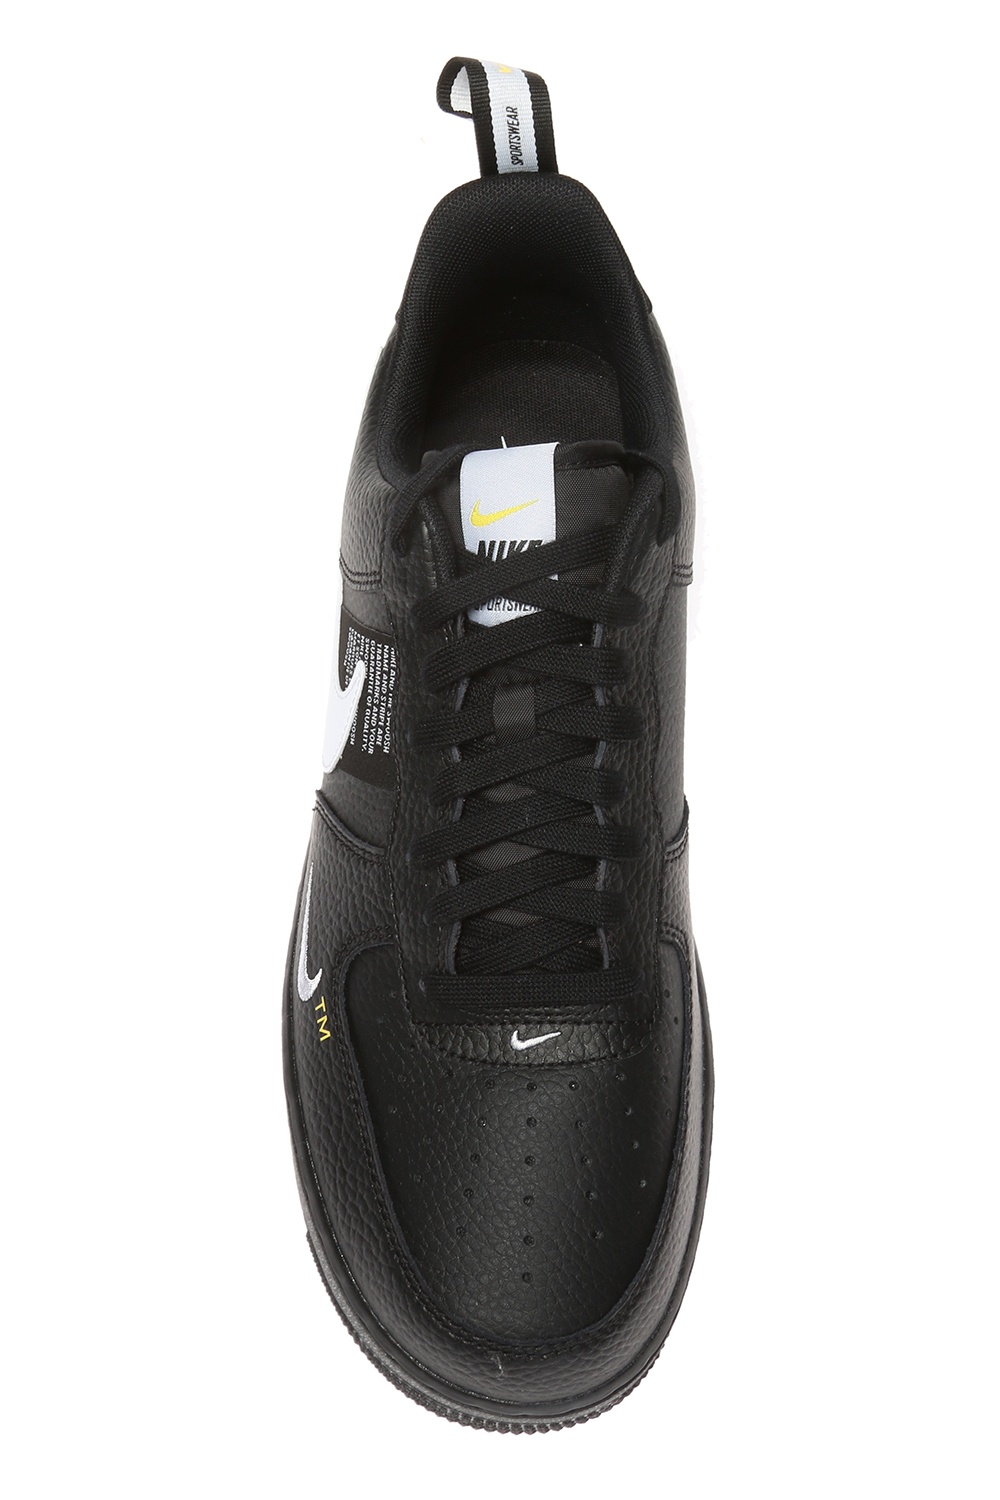 Nike Air Force 1 '07 lv8 Utility Black/White Black Tour Yellow